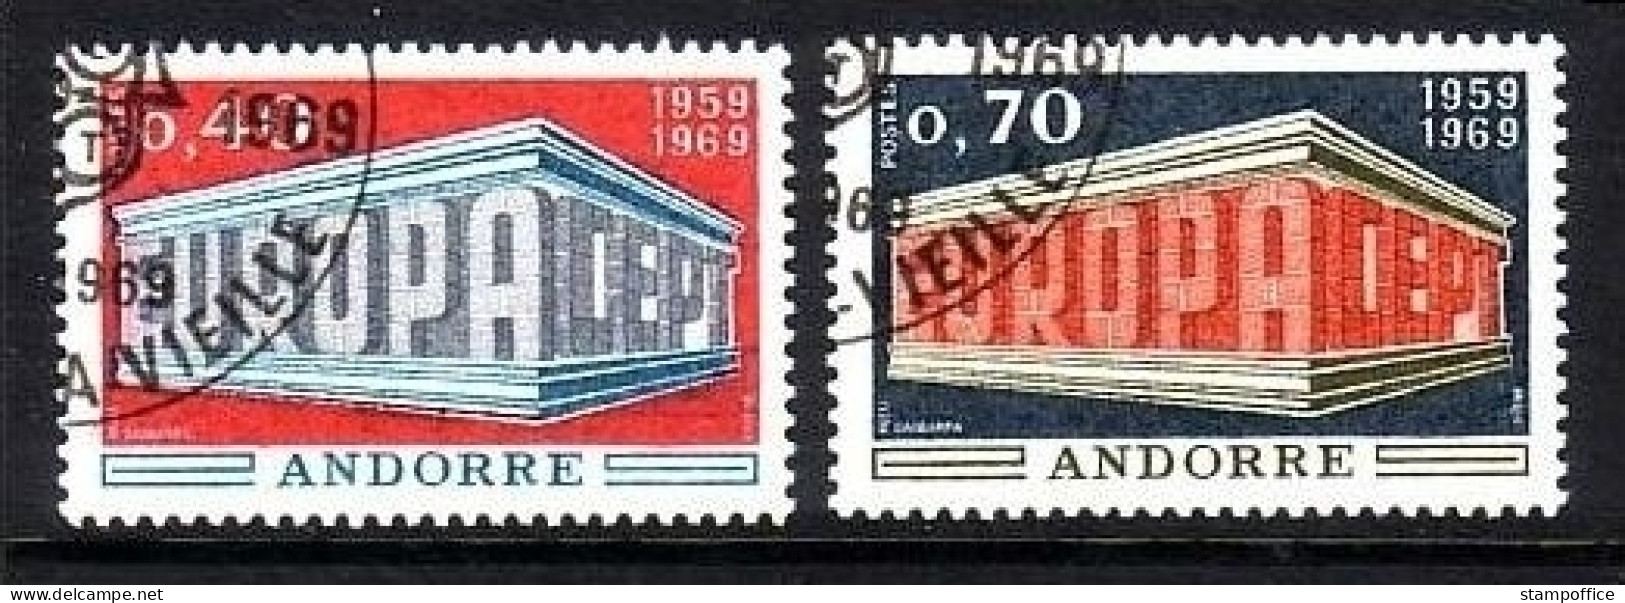 FRANZÖSISCH ANDORRA MI-NR. 214-215 O EUROPA 1969 - 1969